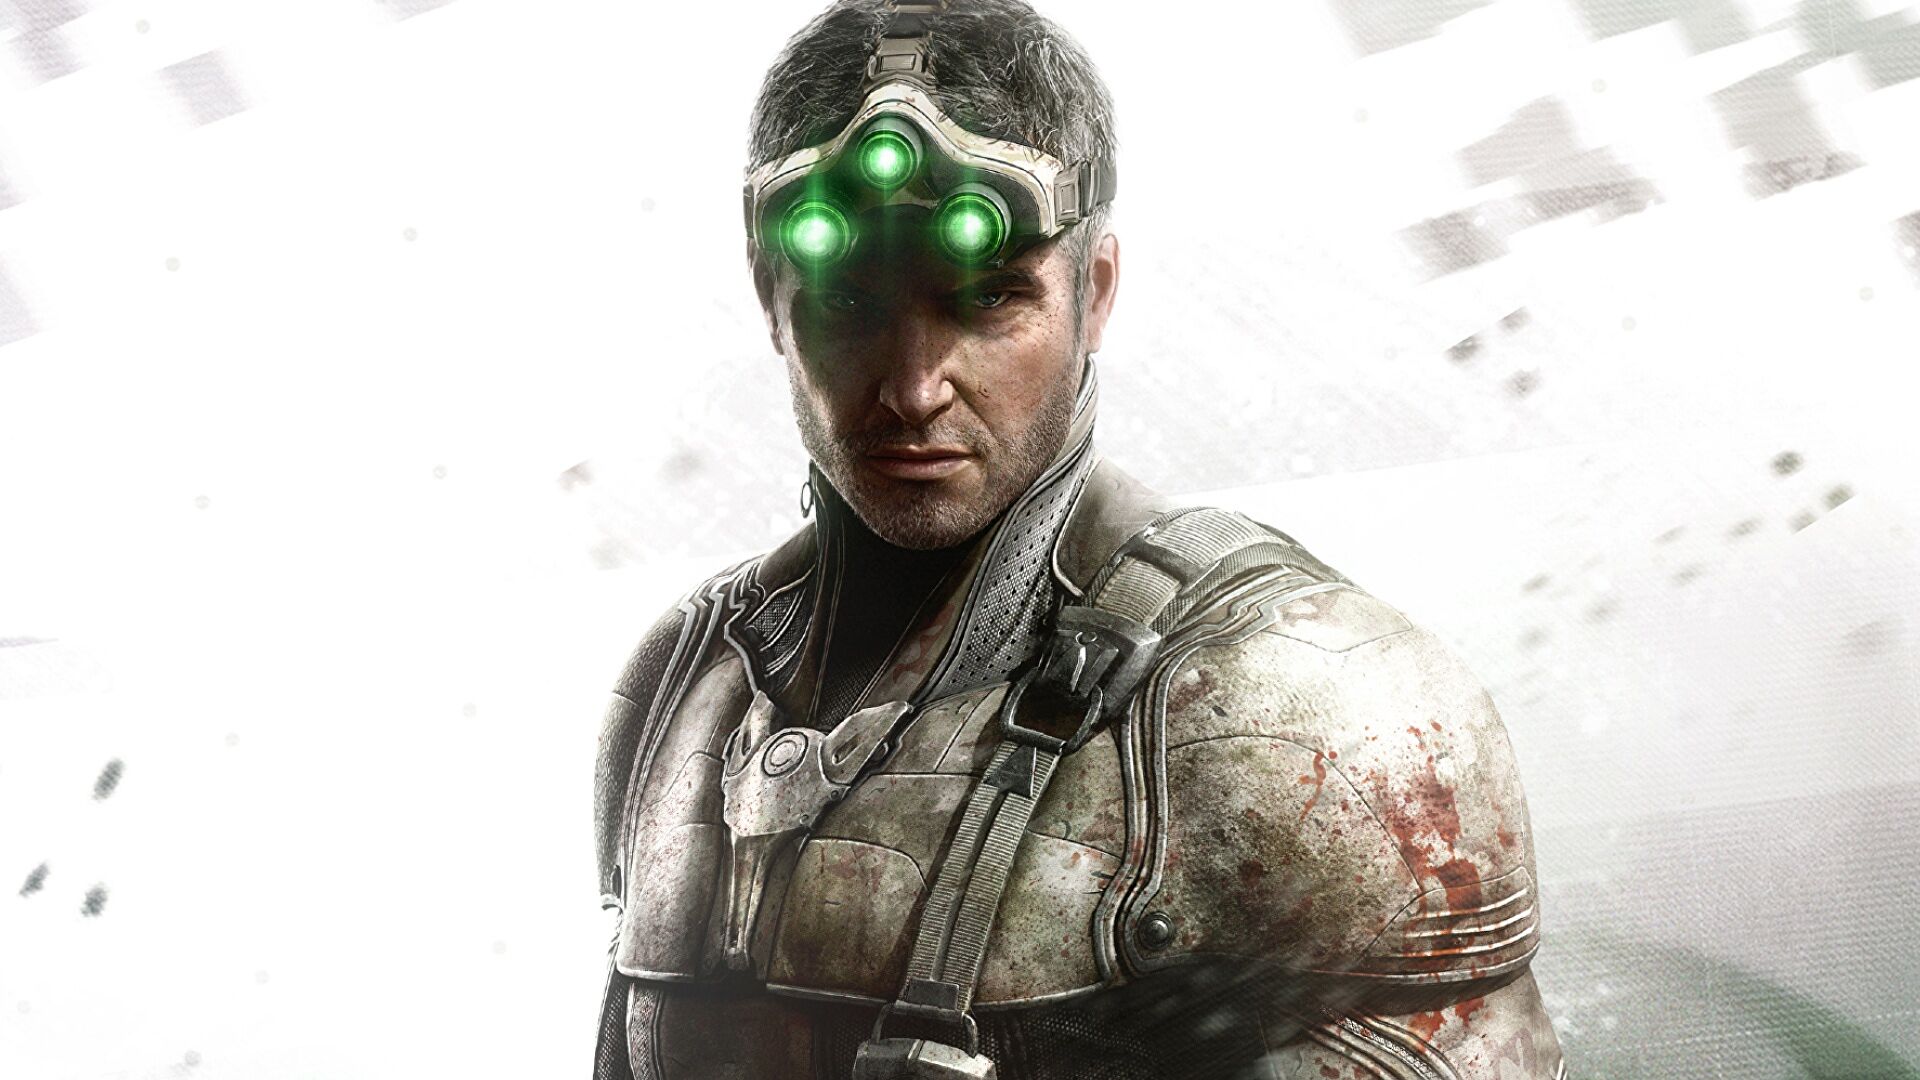 Splinter Cell remake team share concept art before “going dark for a little while”